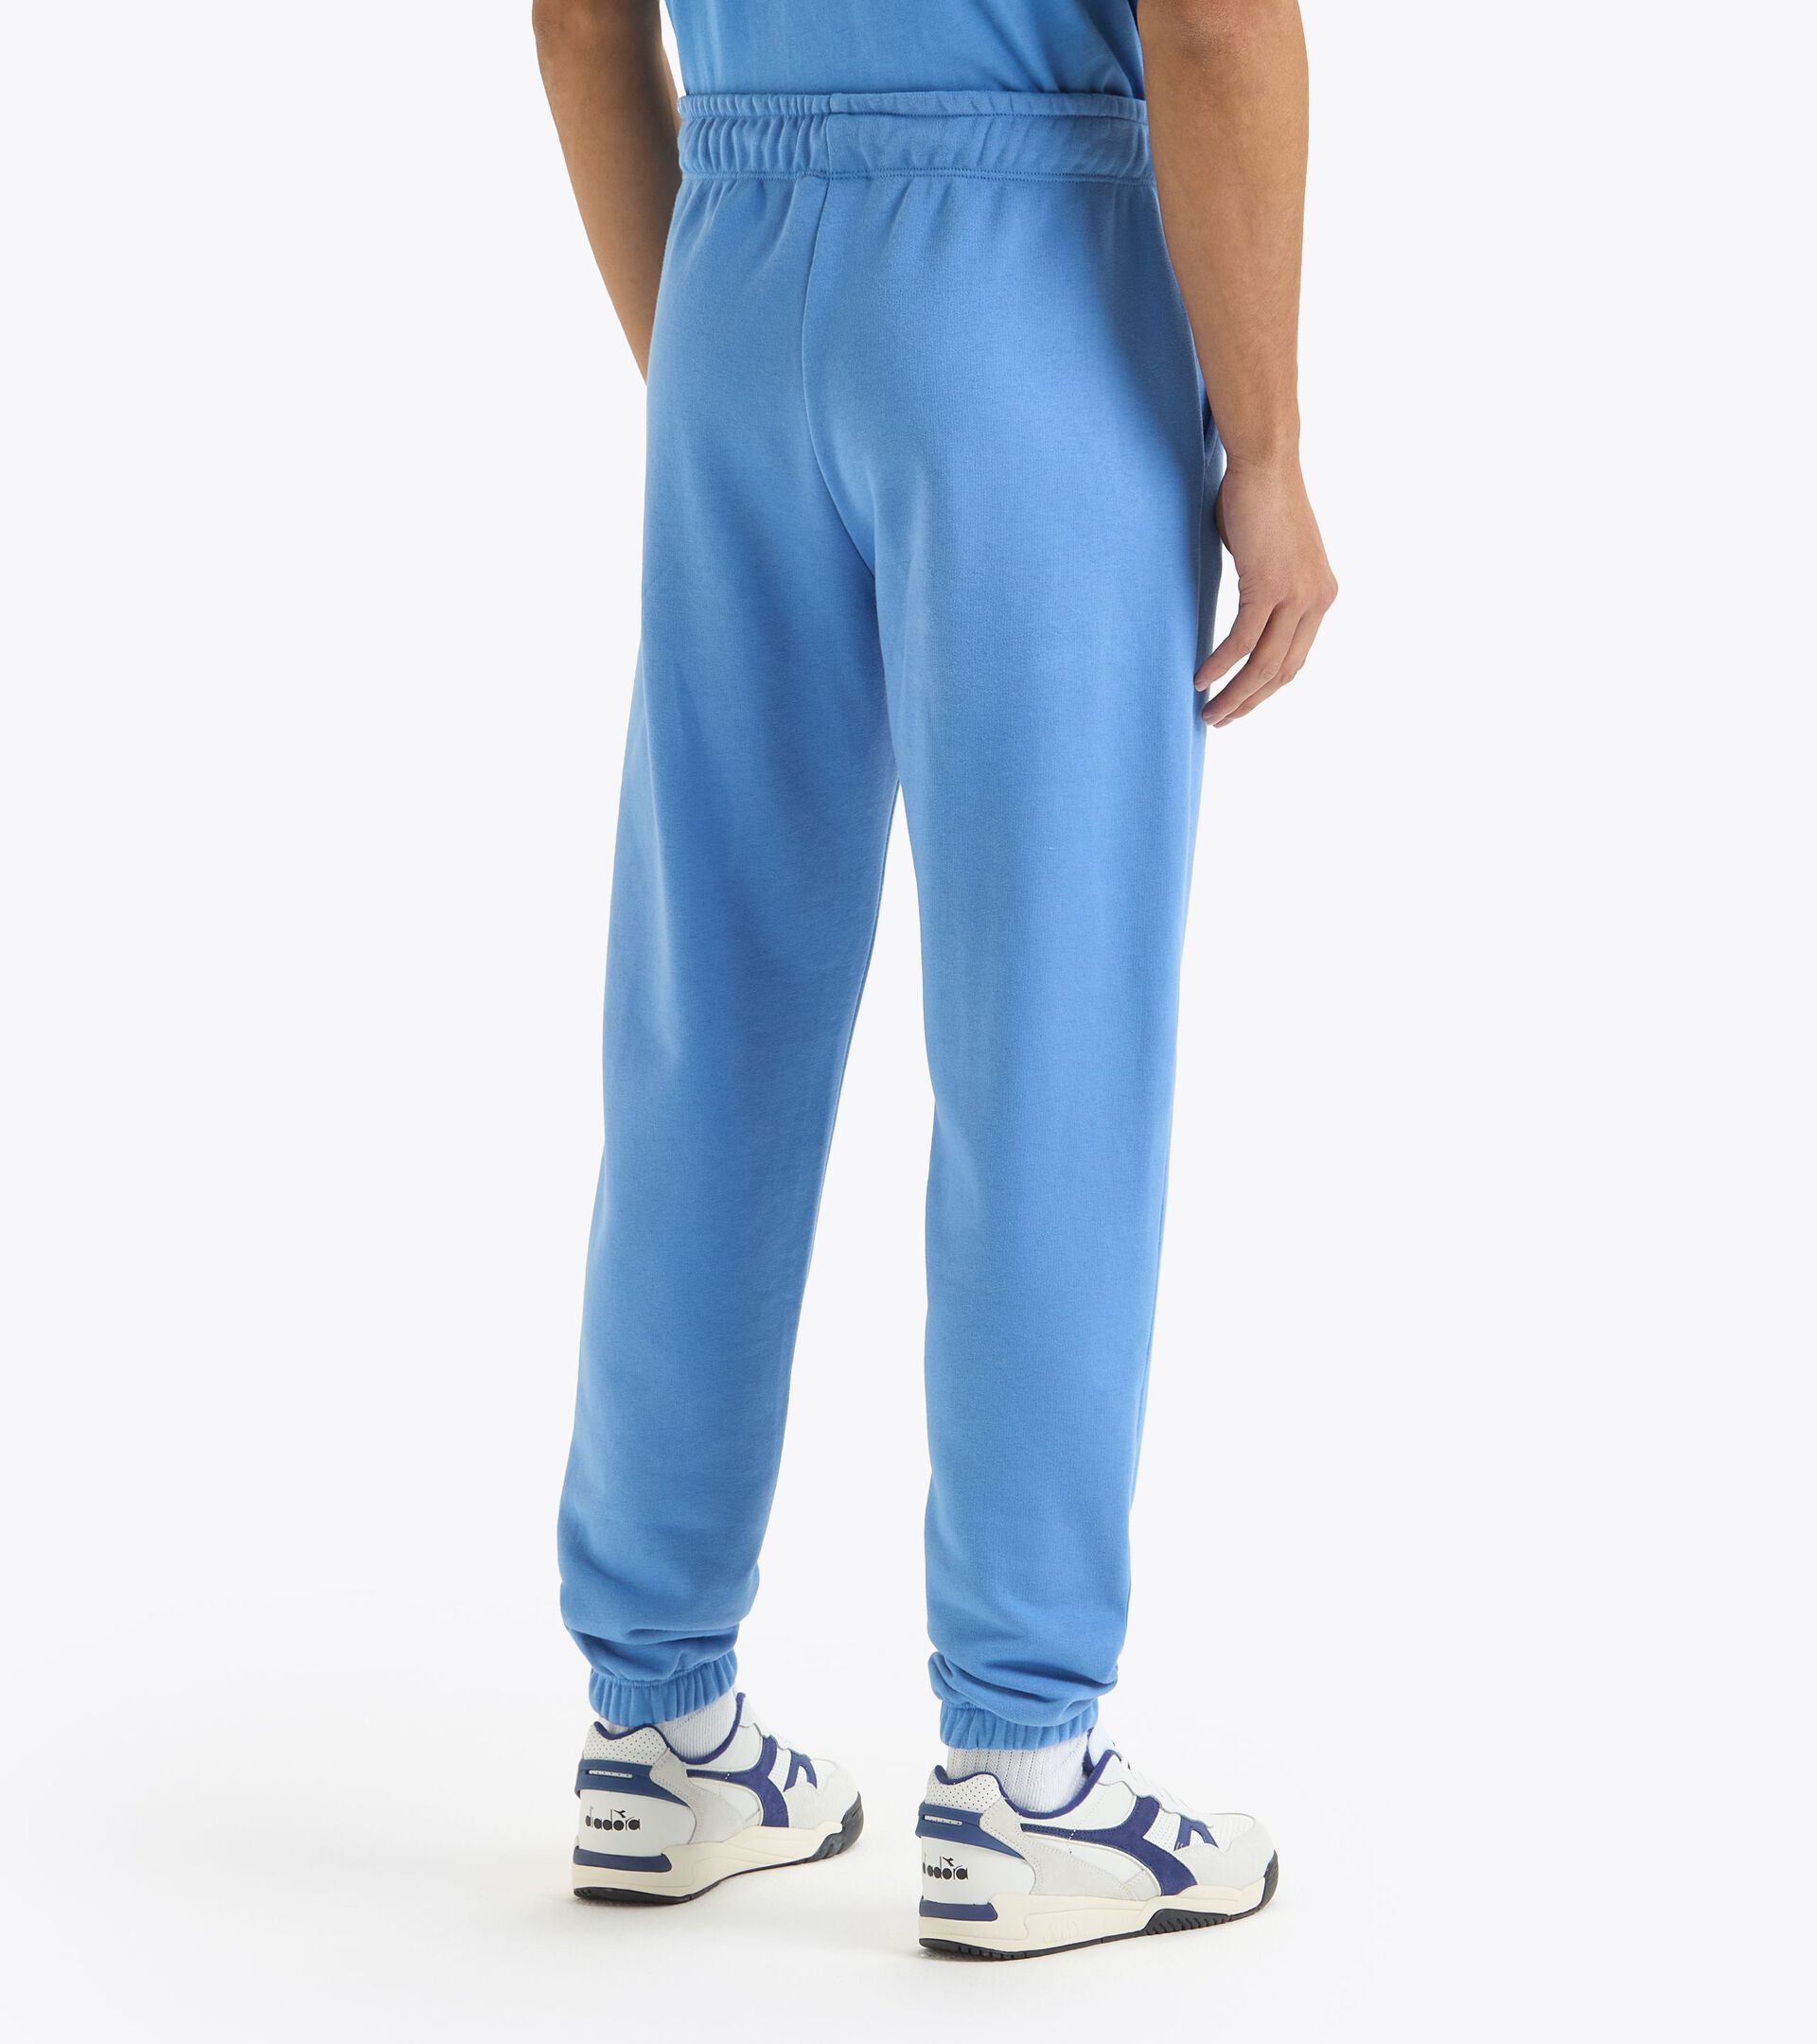 Pantalones deportivos - Gender neutral PANTS ATHL. LOGO PACIFIC COAST - Diadora